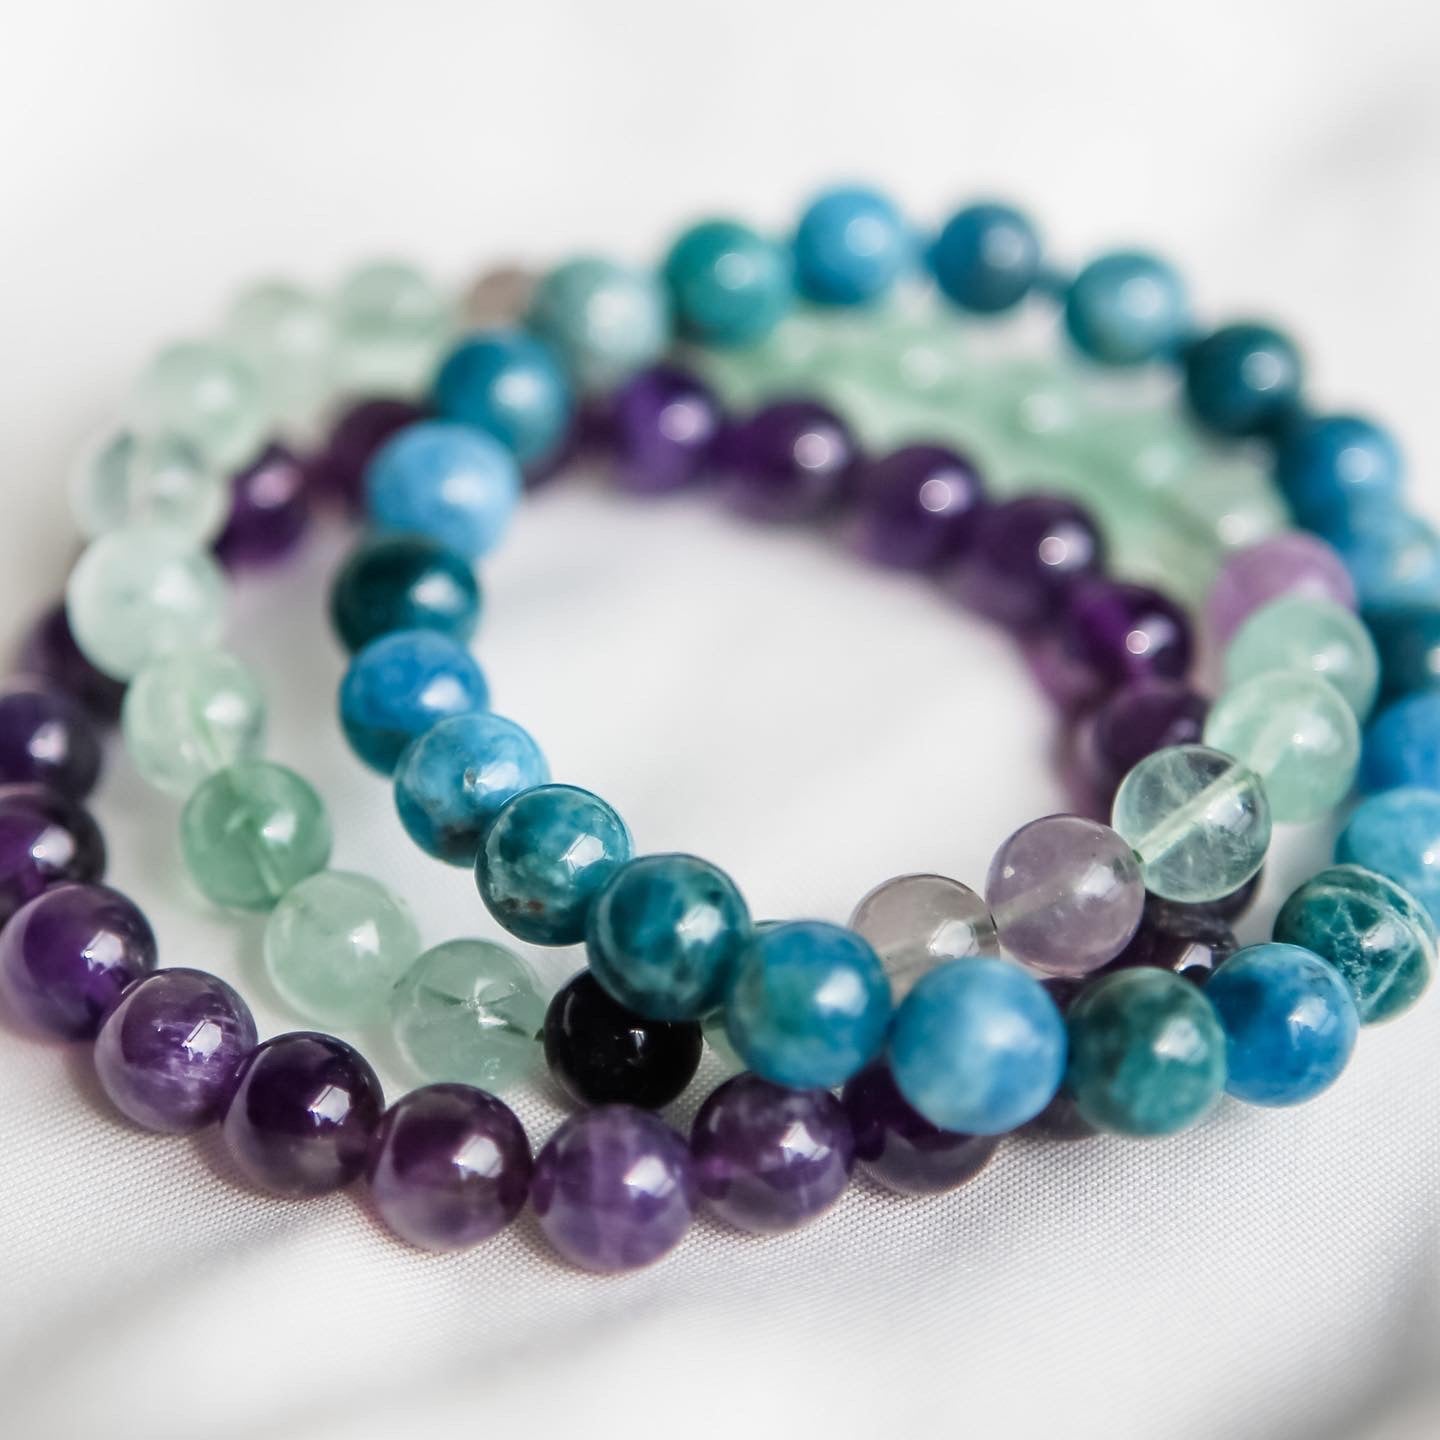 Crystal Beads Bracelet - Amethyst